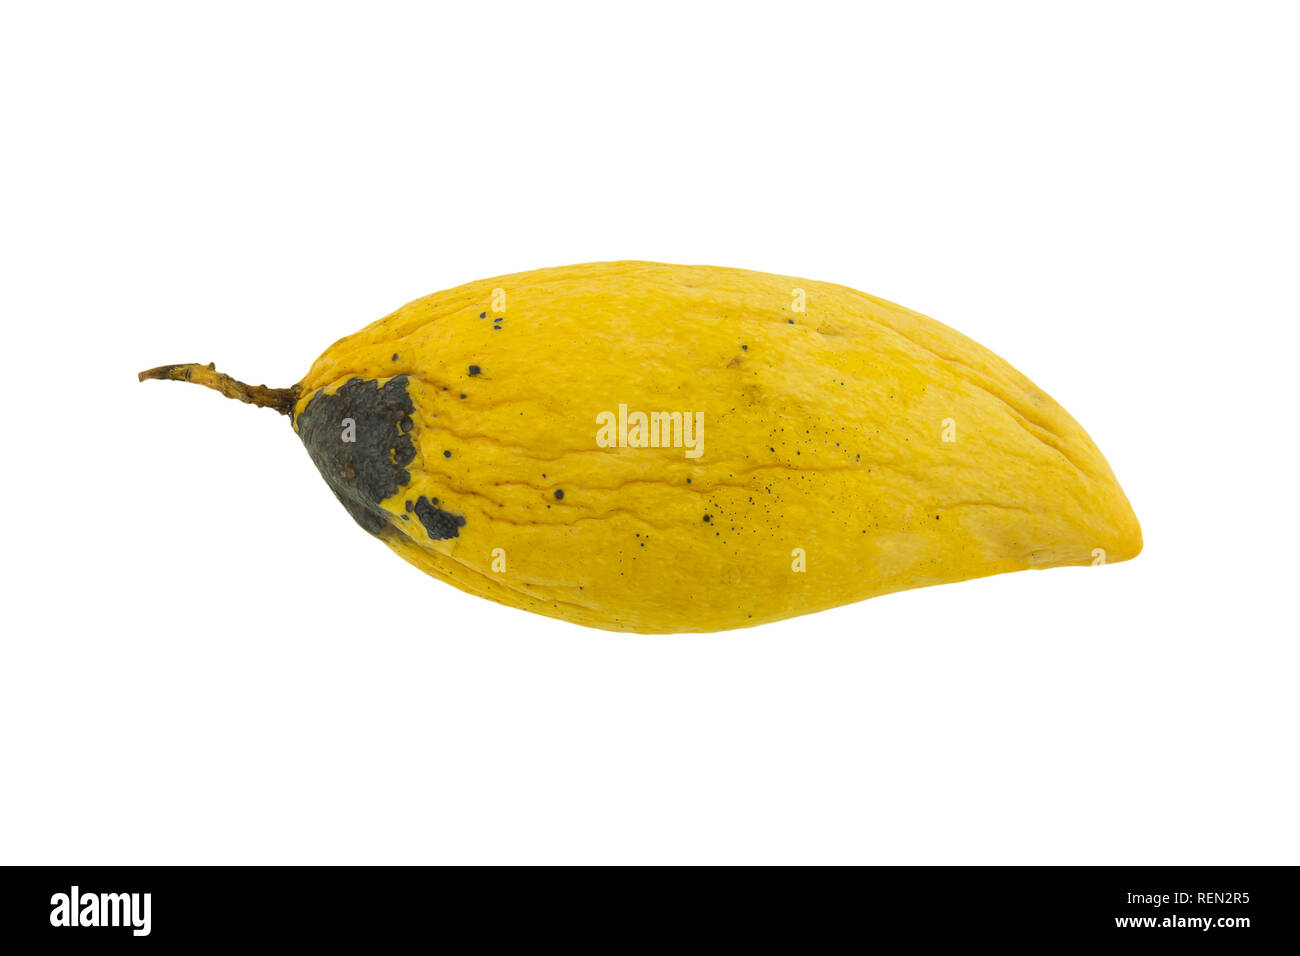 Yellow Rotten Mango Fruit Isolated on Wooden Stock Image - Image of drink,  illness: 81467139